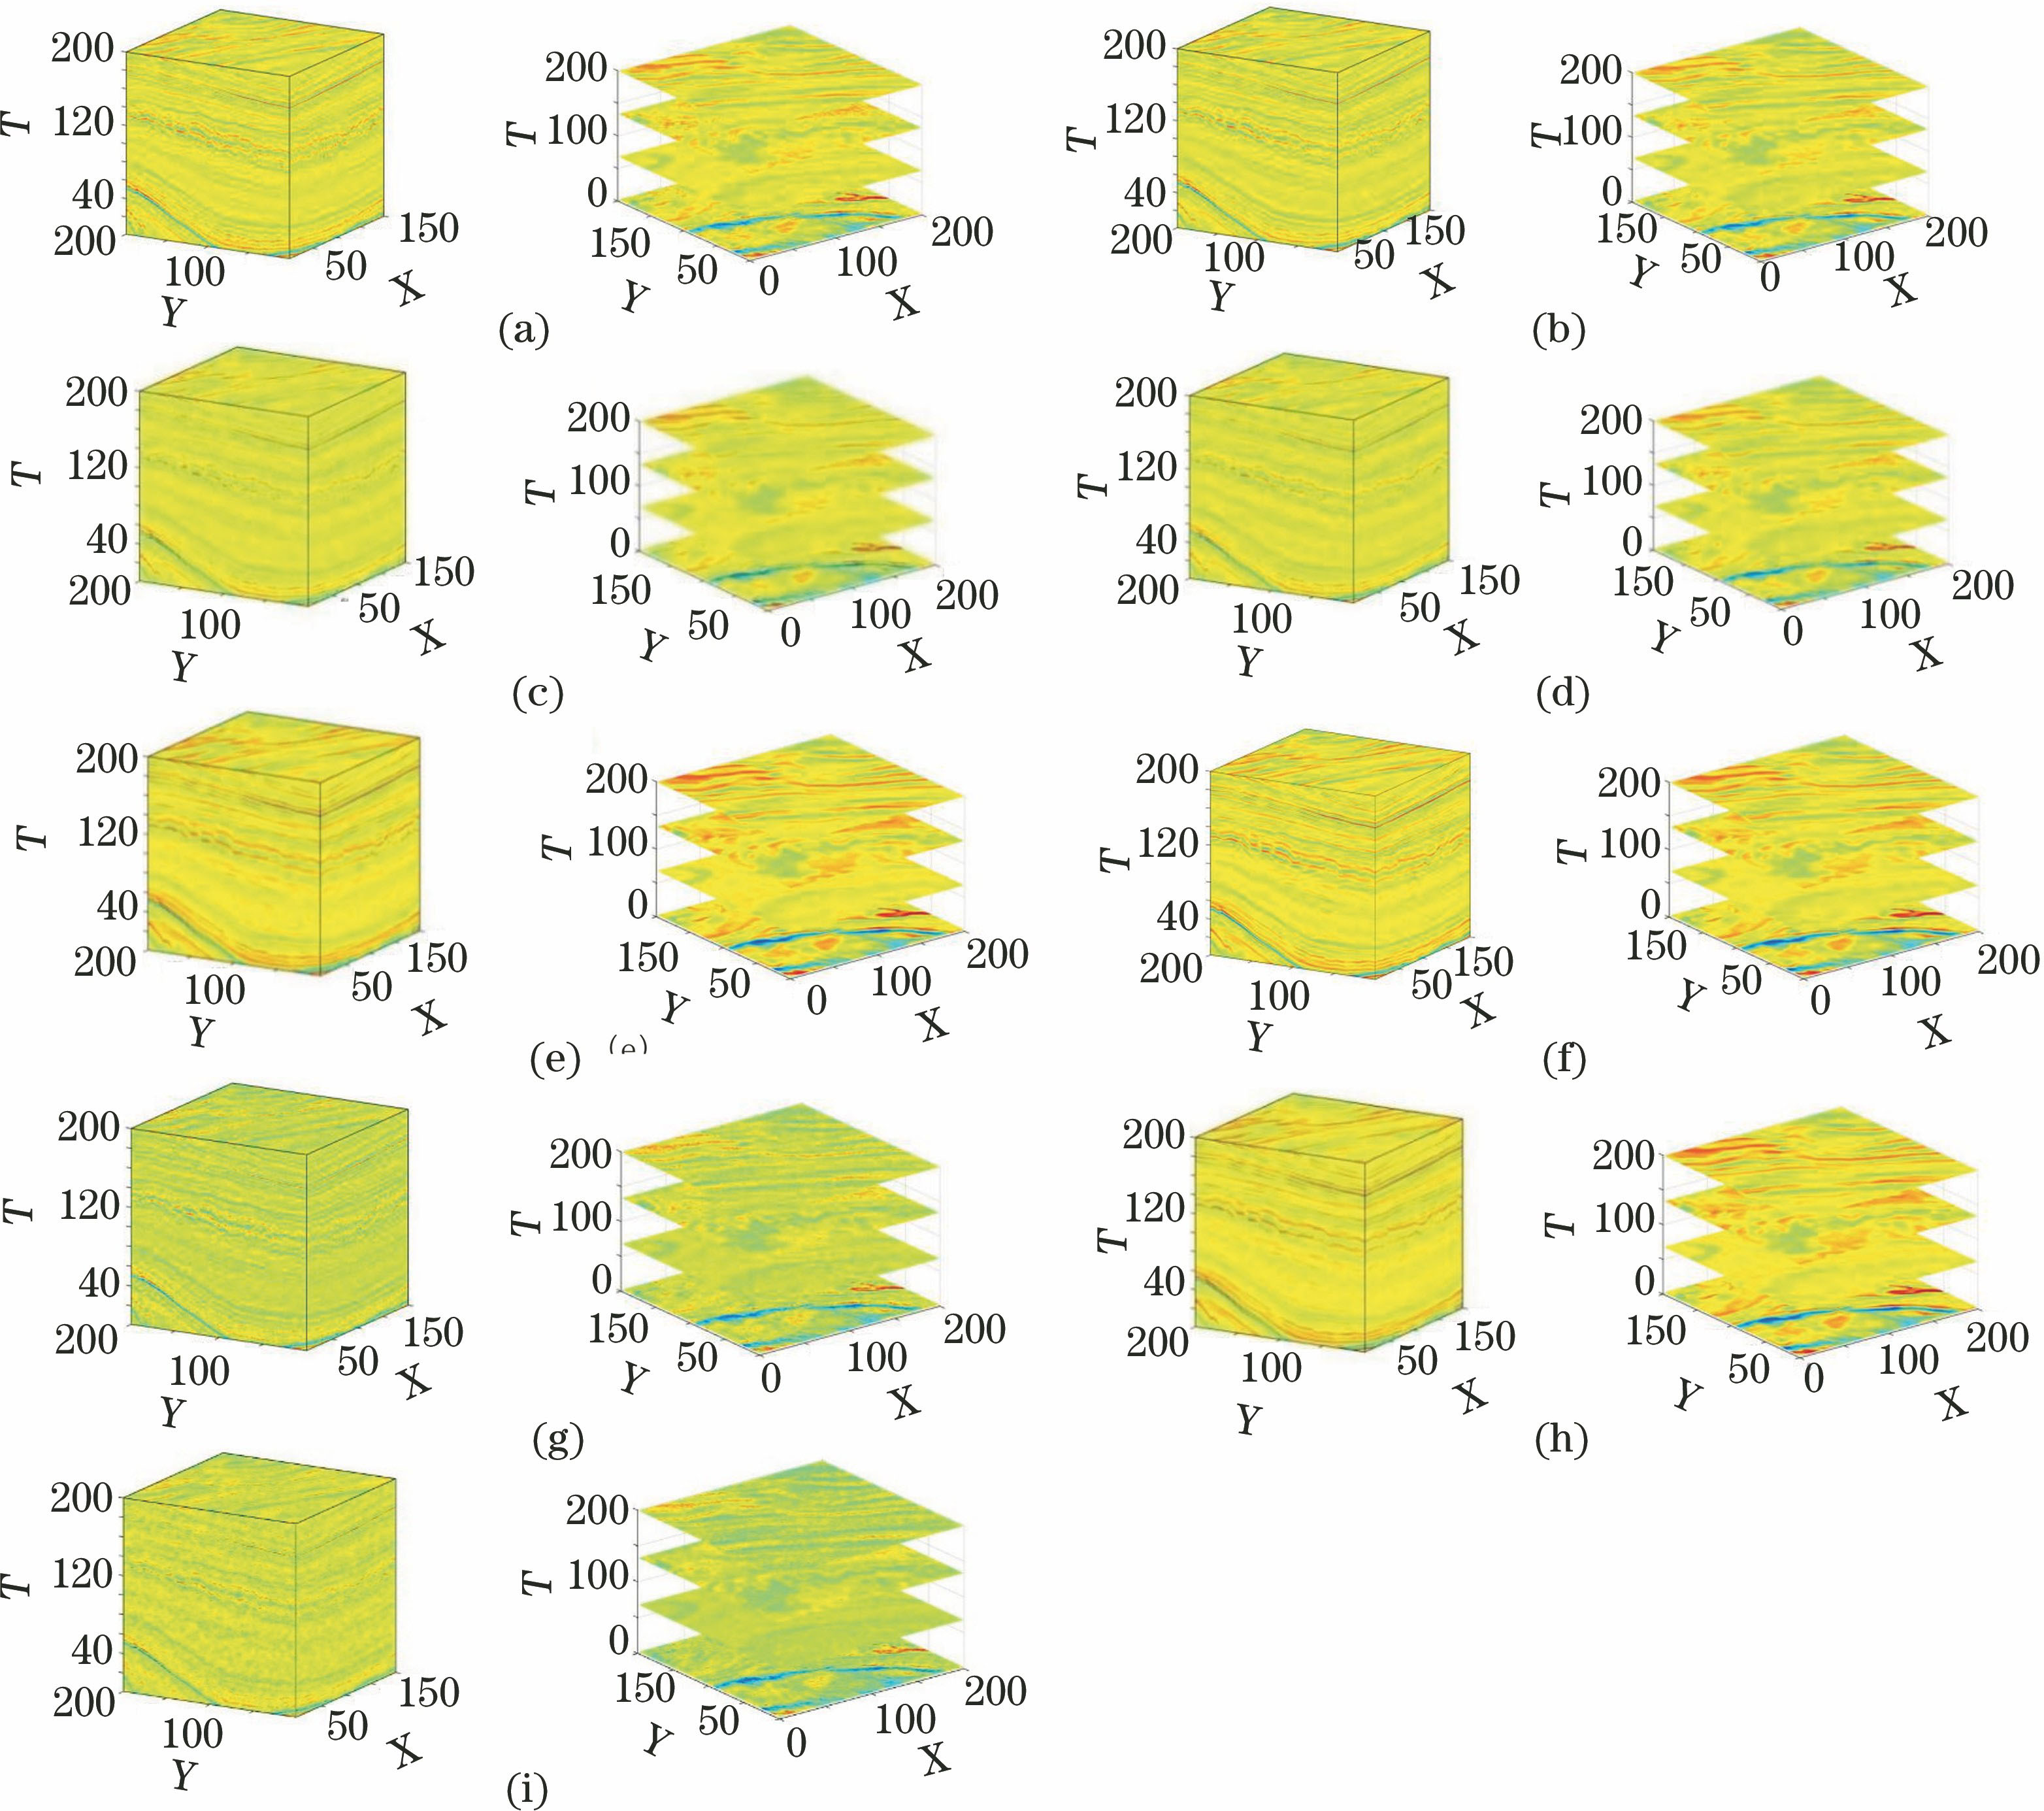 Comparison of noise reduction results of 3D seismic signal 1 acquired by BM4D in combination with different noise estimates. (a) Original signal; (b) 5% noise; (c) PCA+BM4D; (d) Kurtosis+BM4D; (e) Mode+BM4D; (f) Median+BM4D; (g) Min+BM4D; (h) Mad+BM4D; (i) dwt